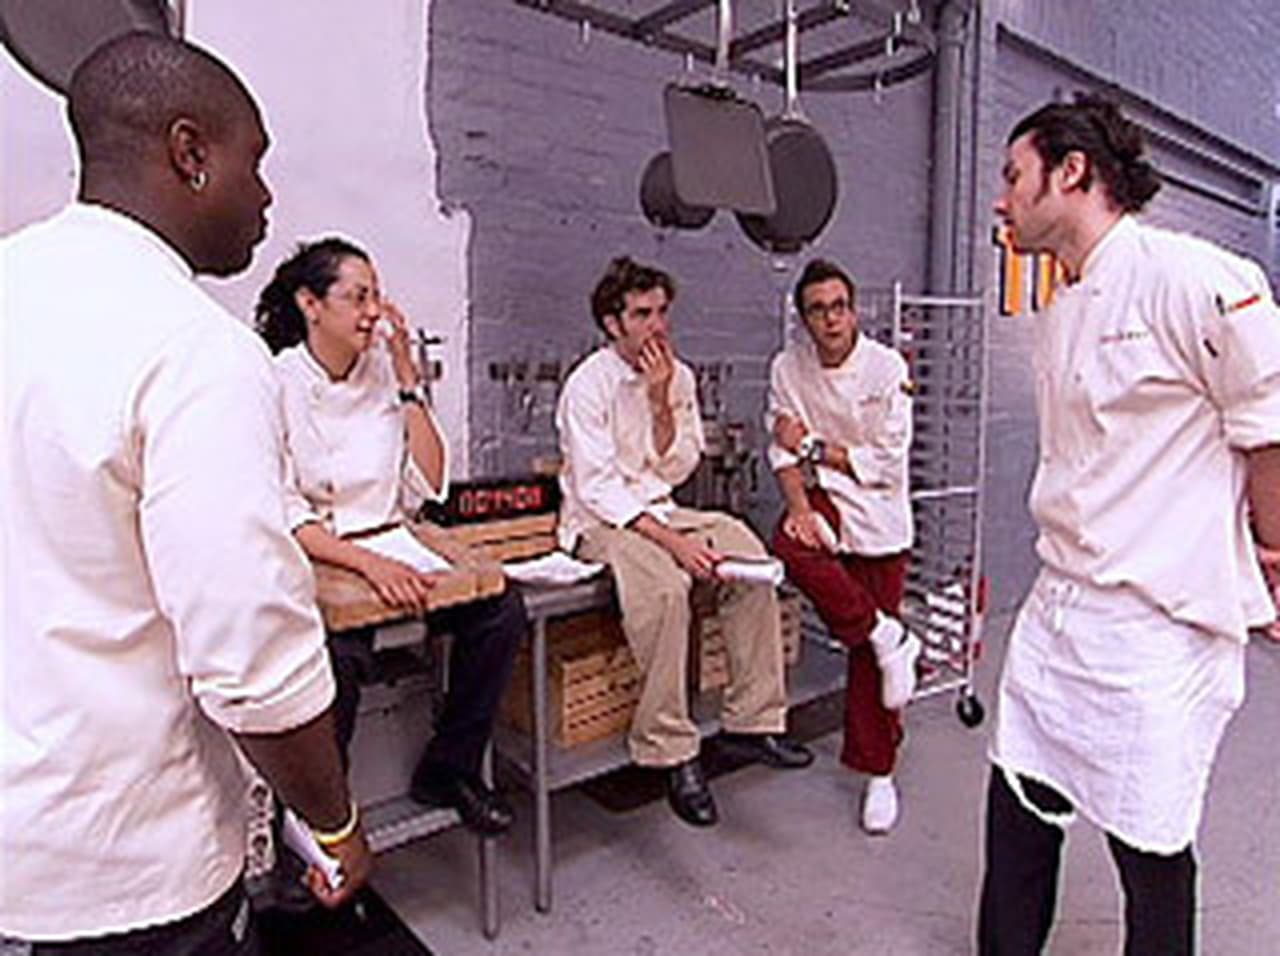 Top Chef - Season 2 Episode 11 : Sense and Sensuality